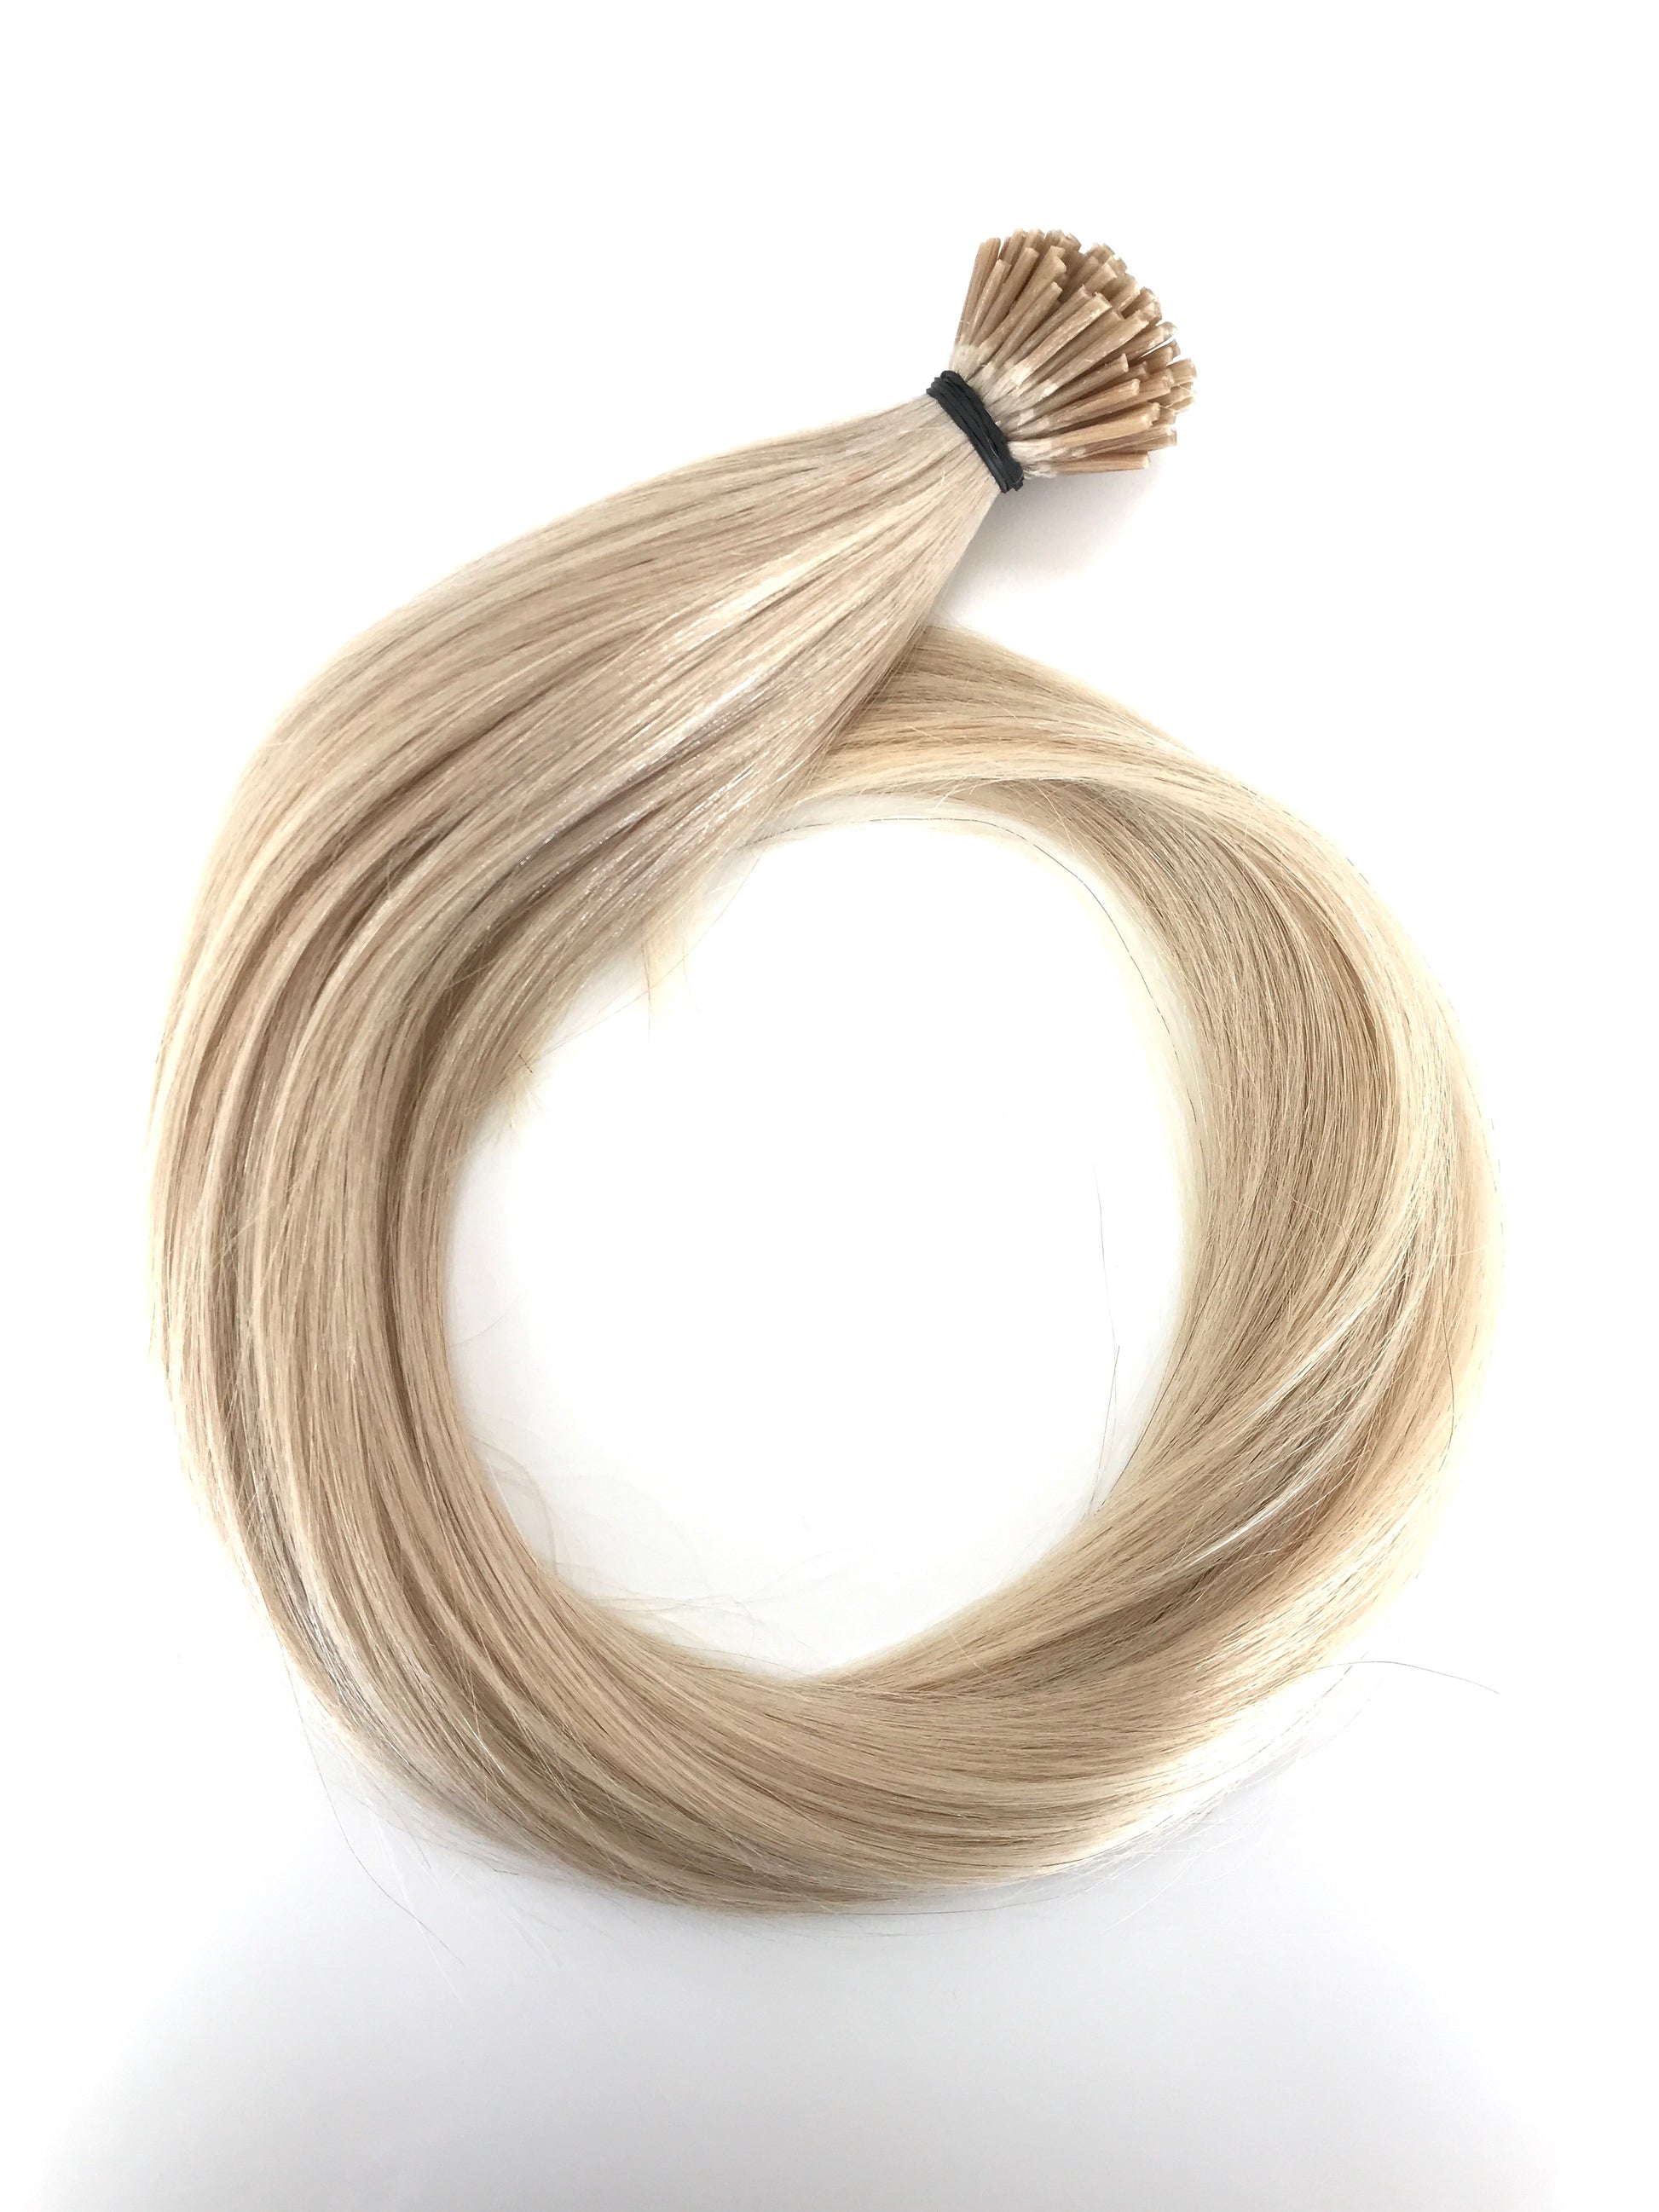 Russian Virgin Human Hair Extensions, 0.7g i-Tip Micro Rings-Virgin Hair & Beauty, The Best Hair Extensions, Real Virgin Human Hair.